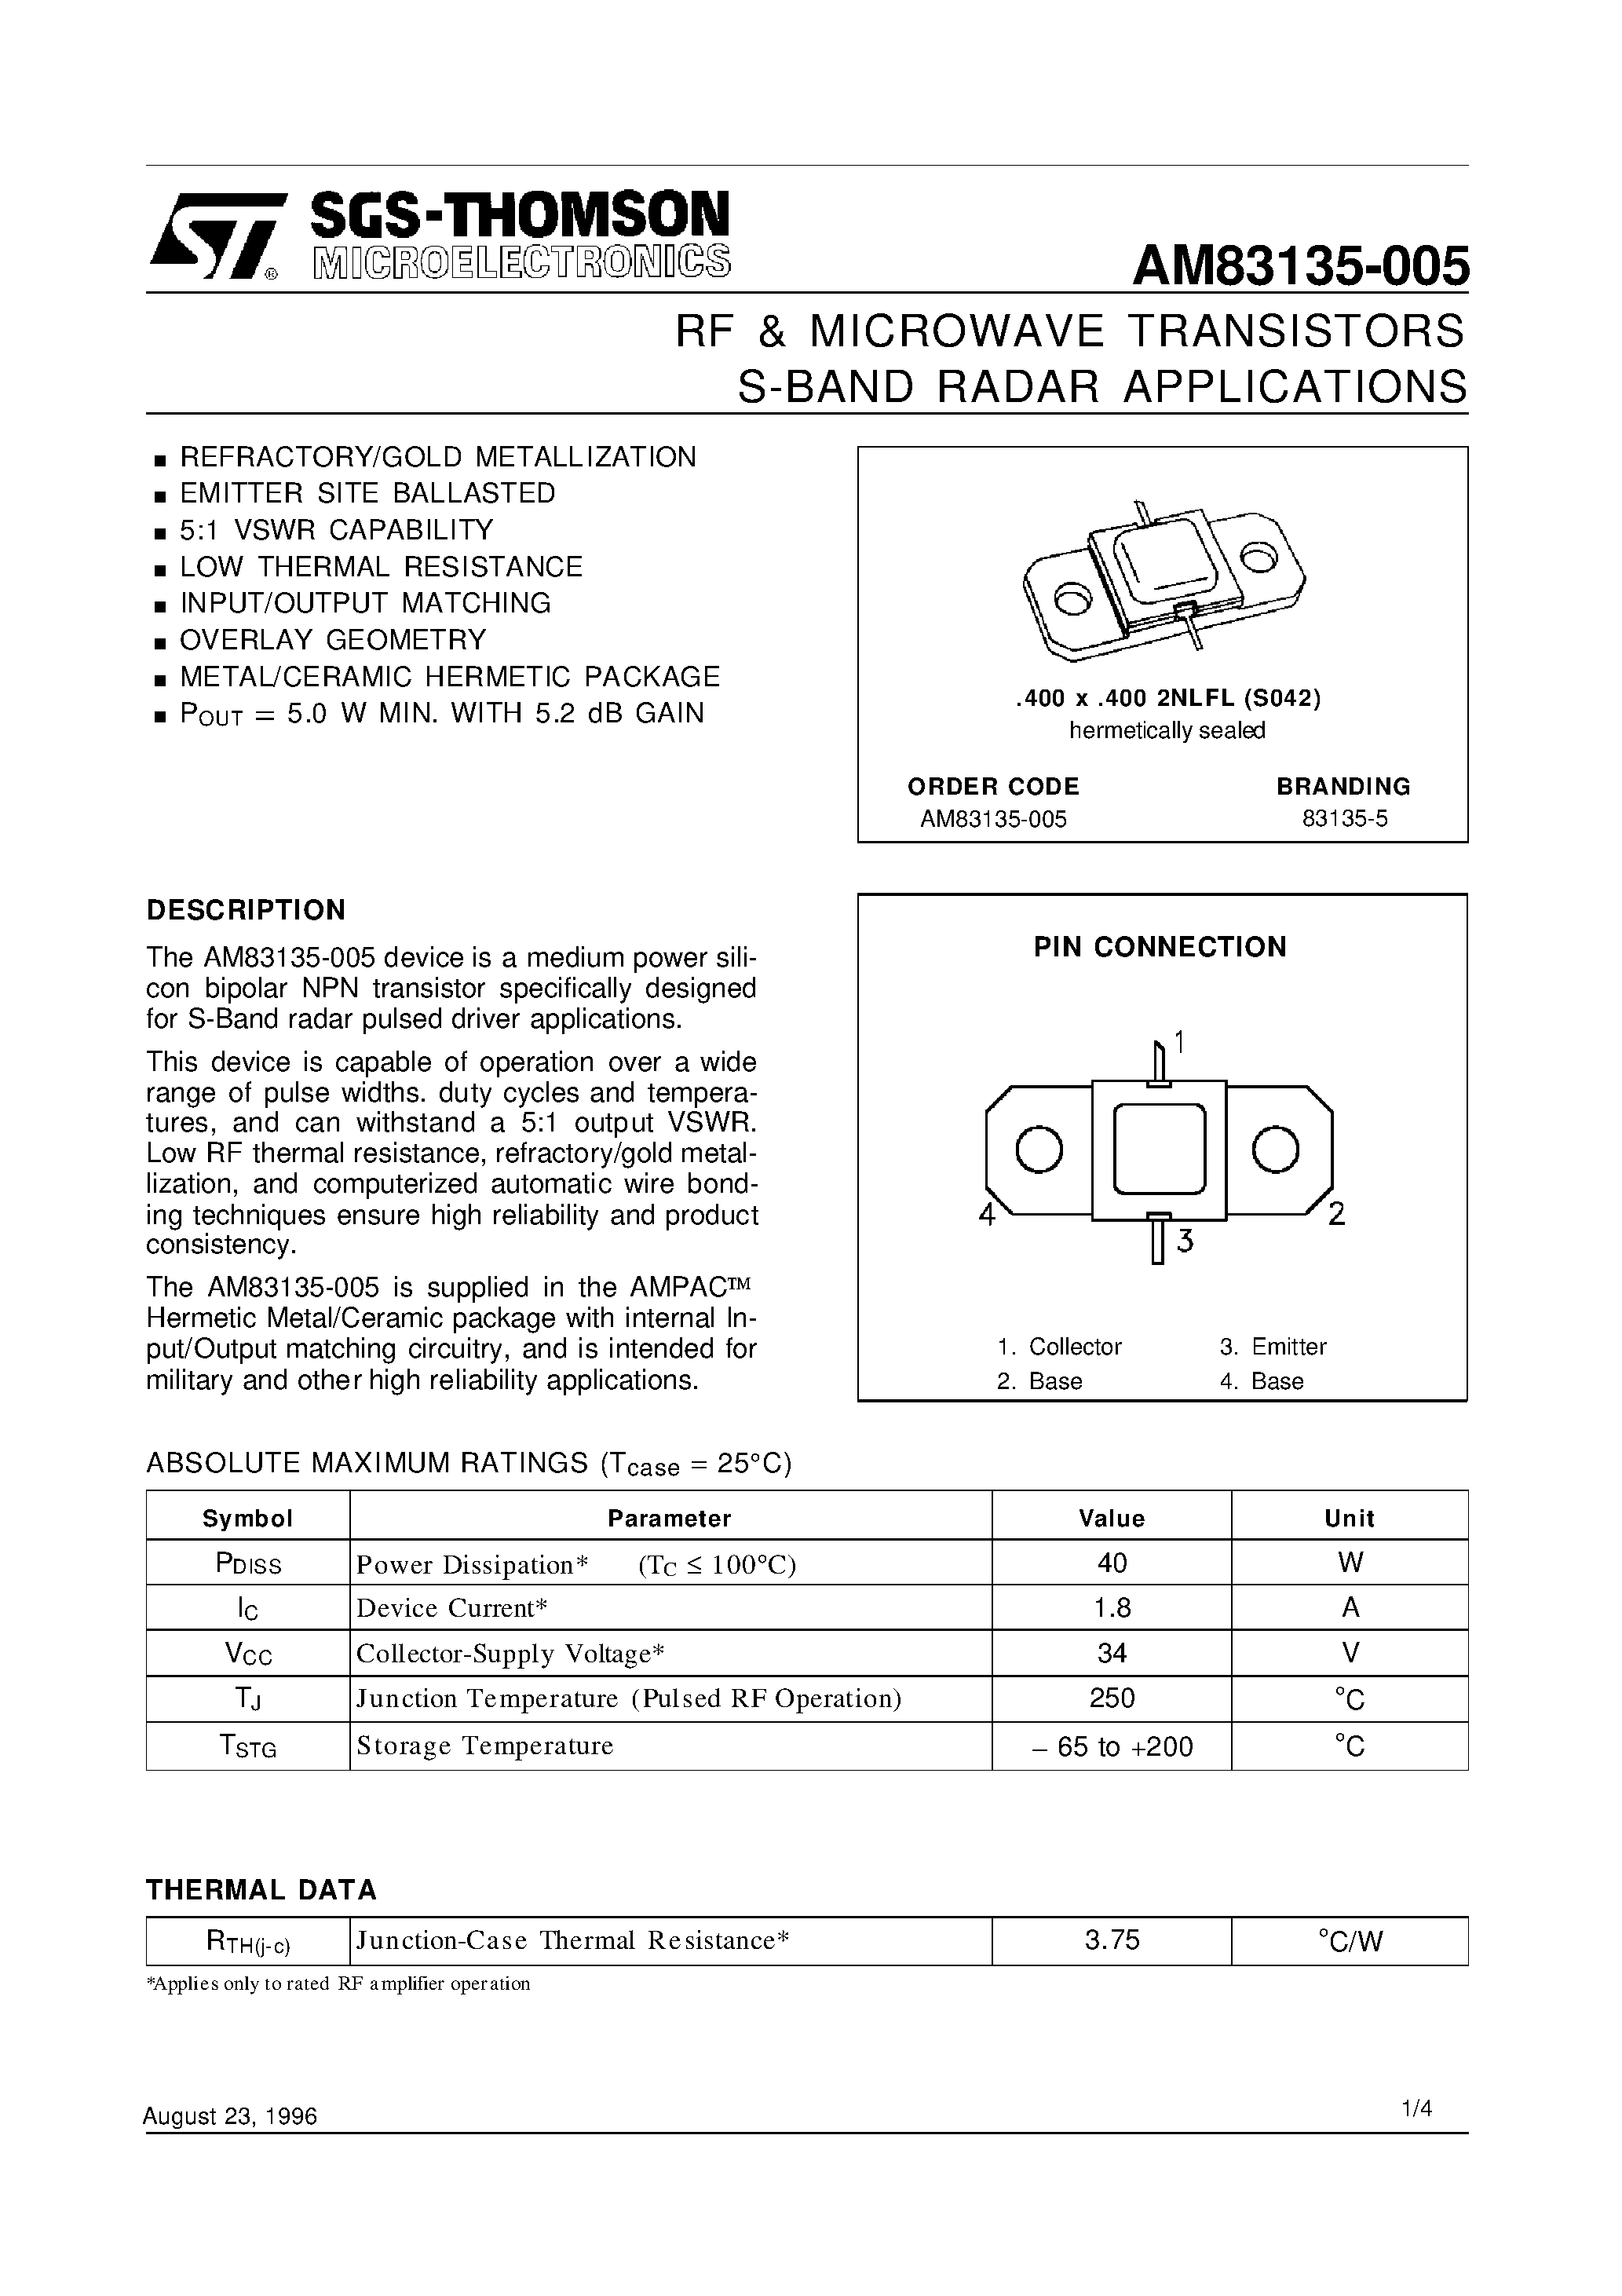 Datasheet AM83135-005 - RF & MICROWAVE TRANSISTORS S-BAND RADAR APPLICATIONS page 1